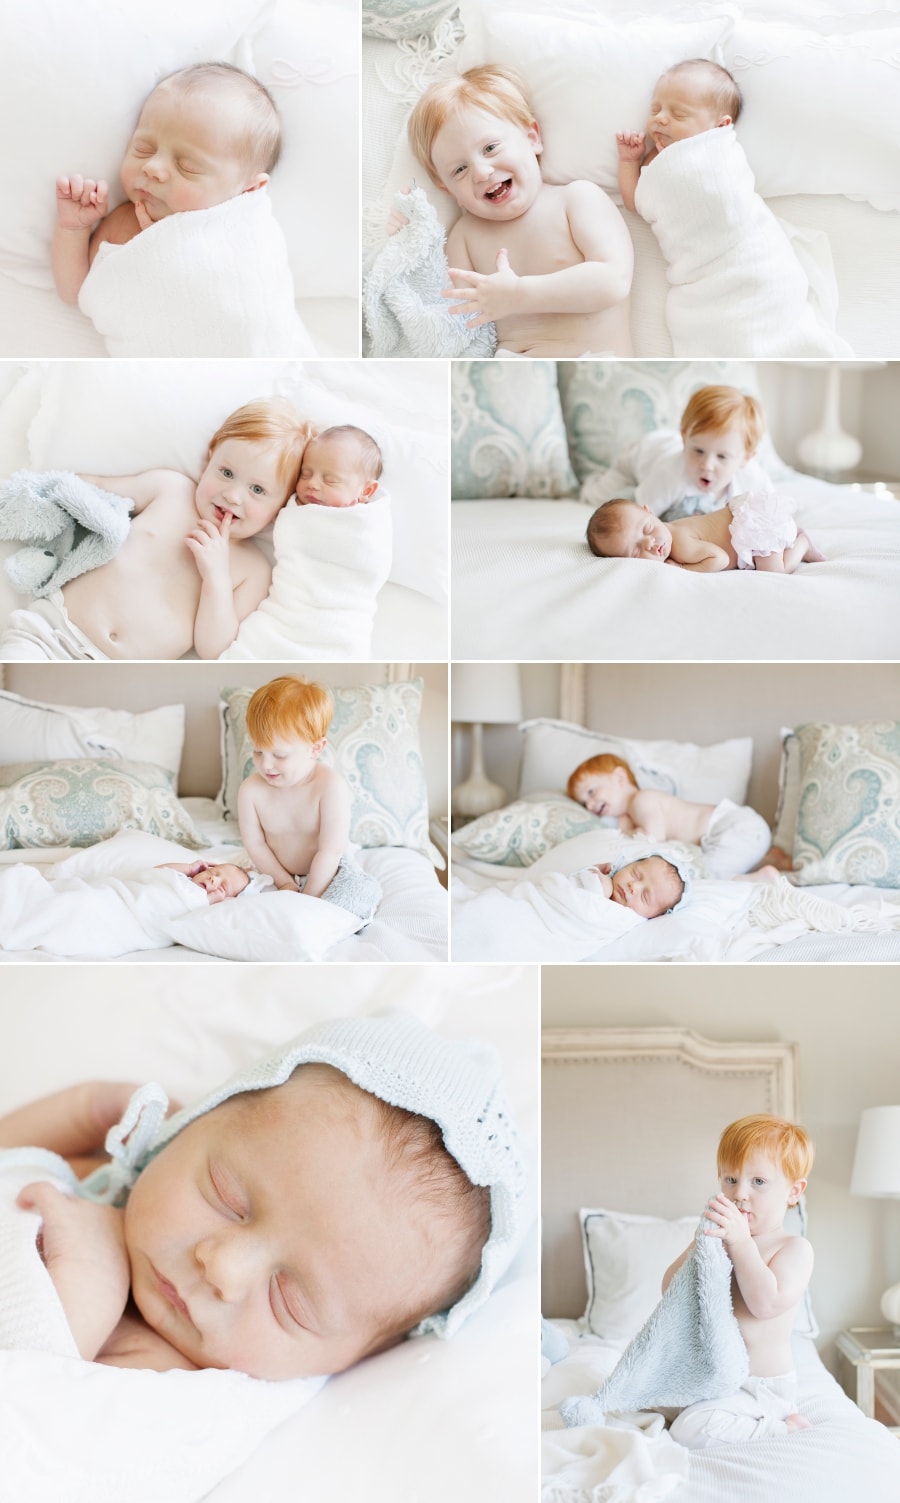 savannah newborn photographer photos of newborn baby and older brother on bed